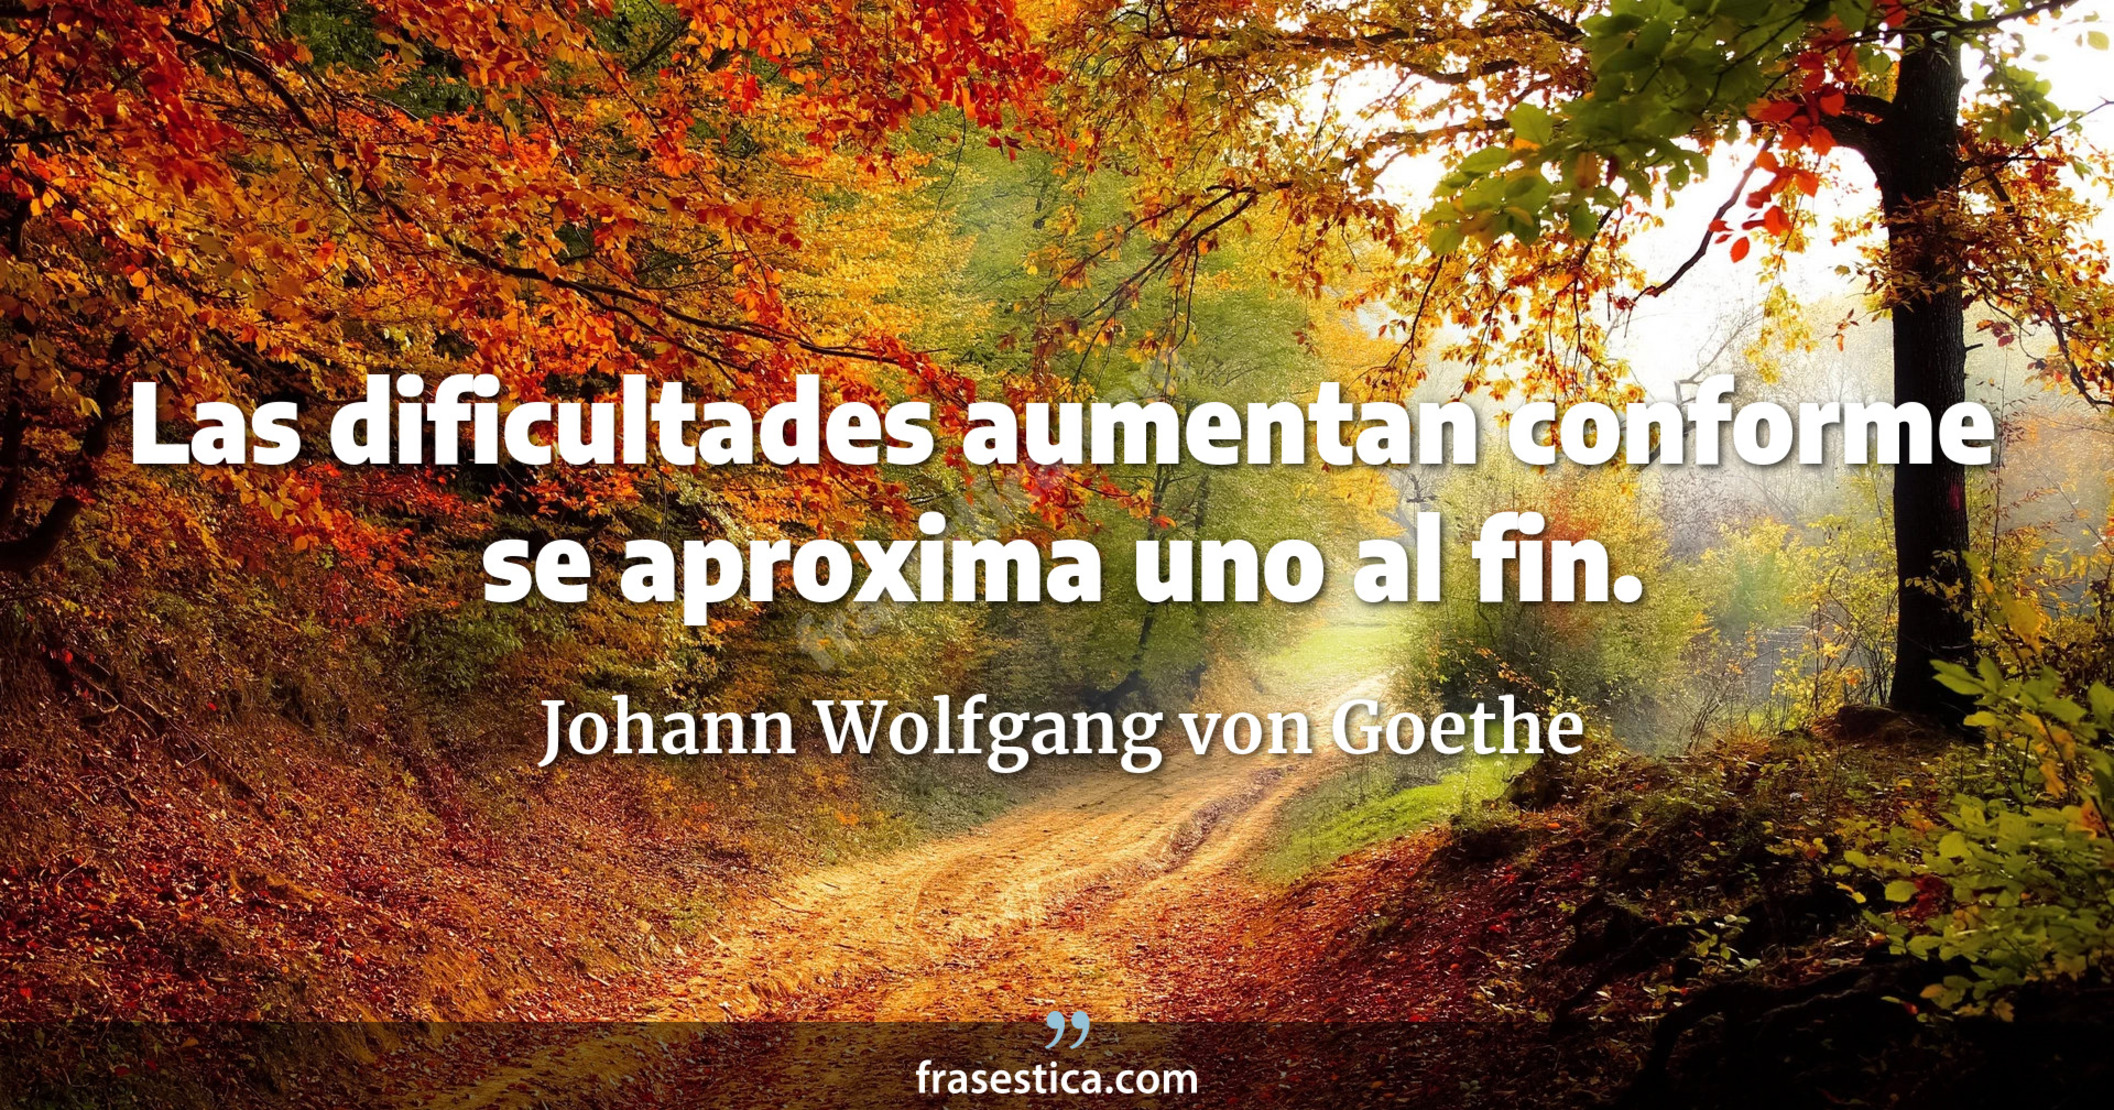 Las dificultades aumentan conforme se aproxima uno al fin. - Johann Wolfgang von Goethe